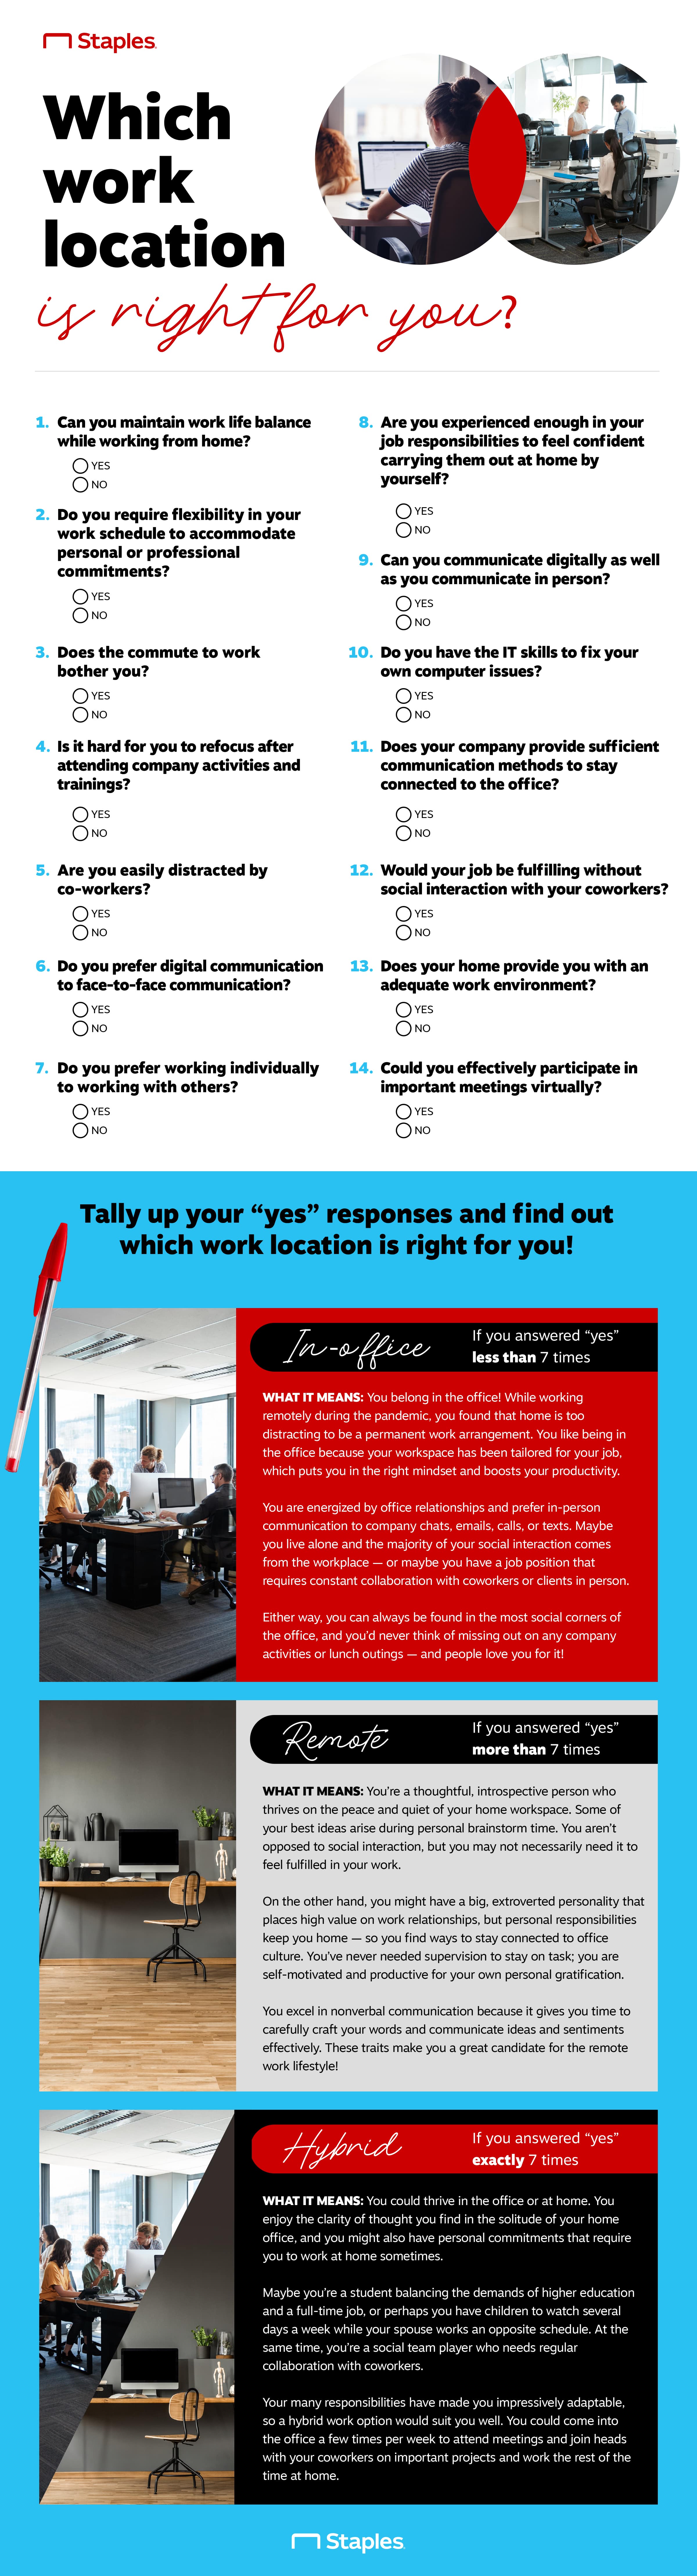 Work location infographic